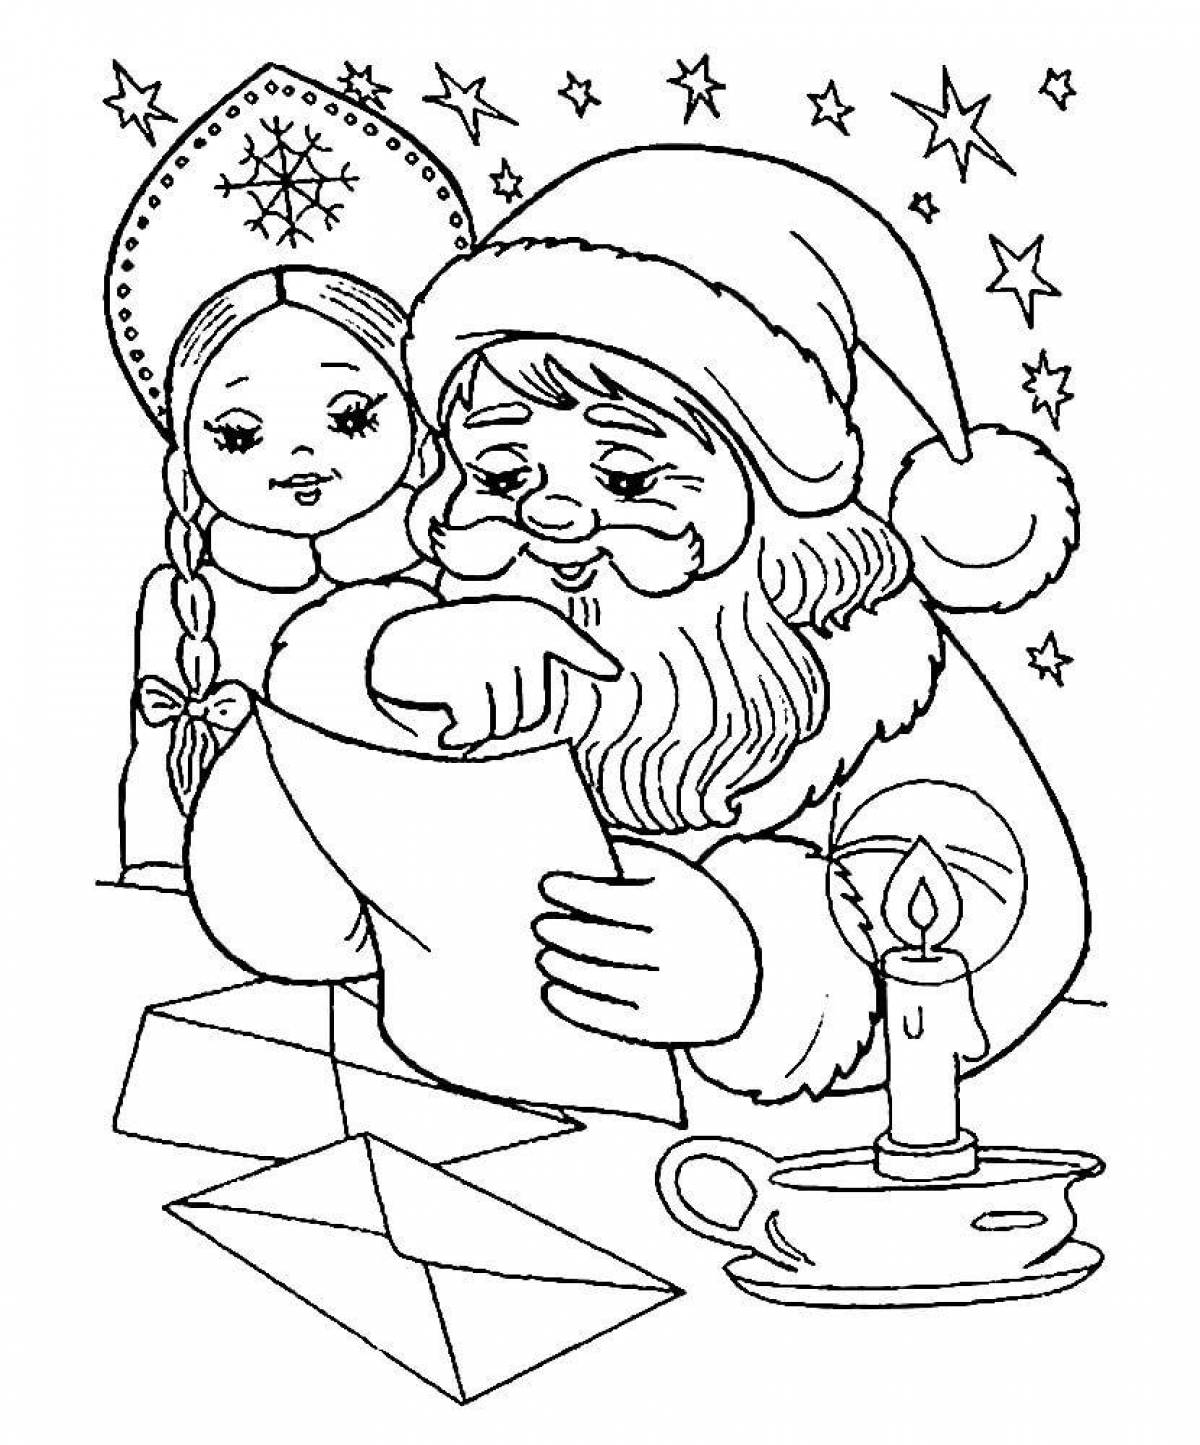 Coloring cute santa claus